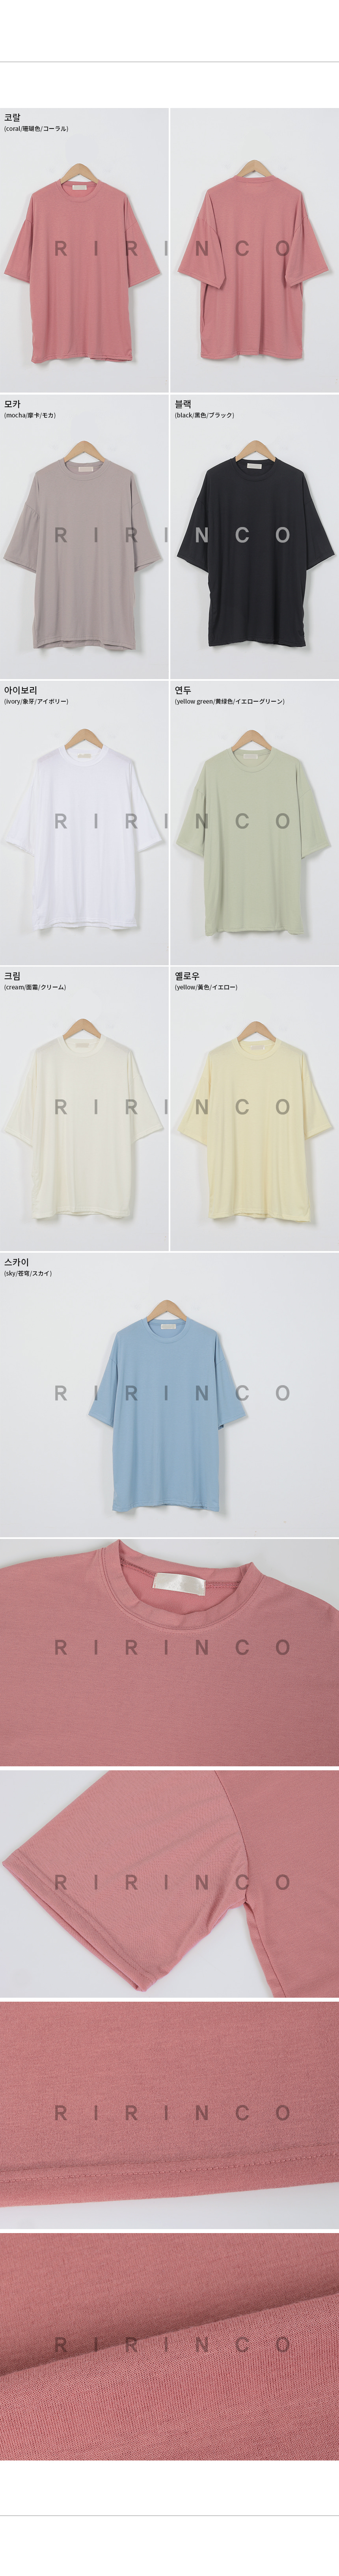 RIRINCO ラウンドネックスパンデックス半袖Tシャツ